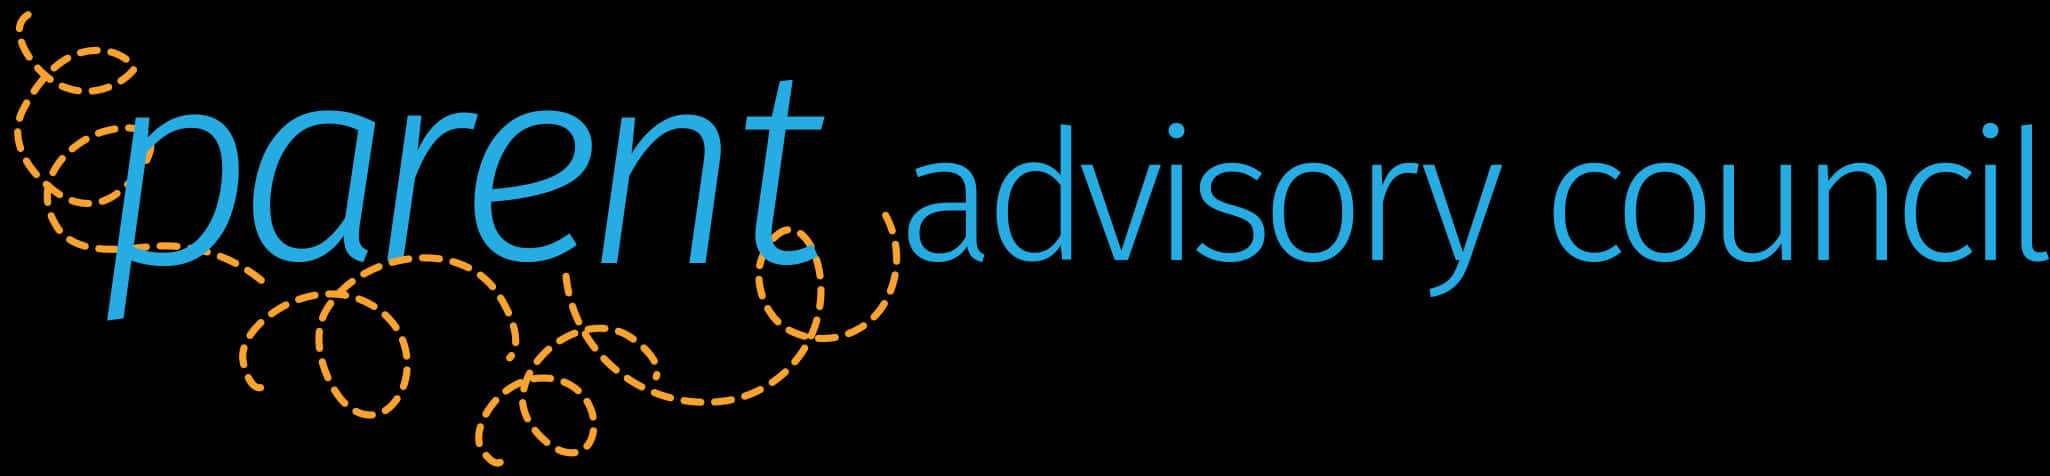 Parent Advisory Council Logo PNG